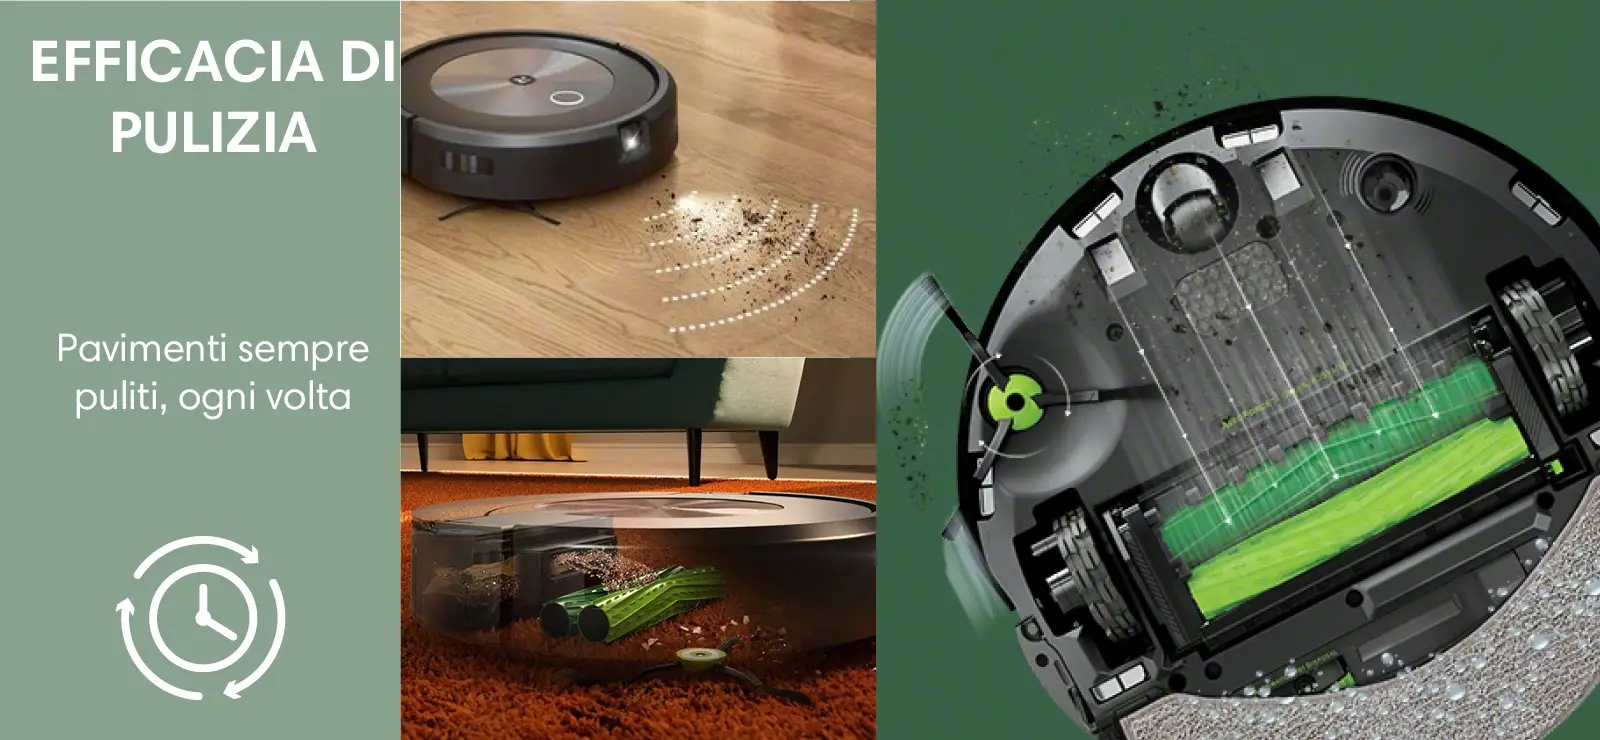 iRobot Roomba Combo j7, Robot Aspirapolvere Lavapavimenti